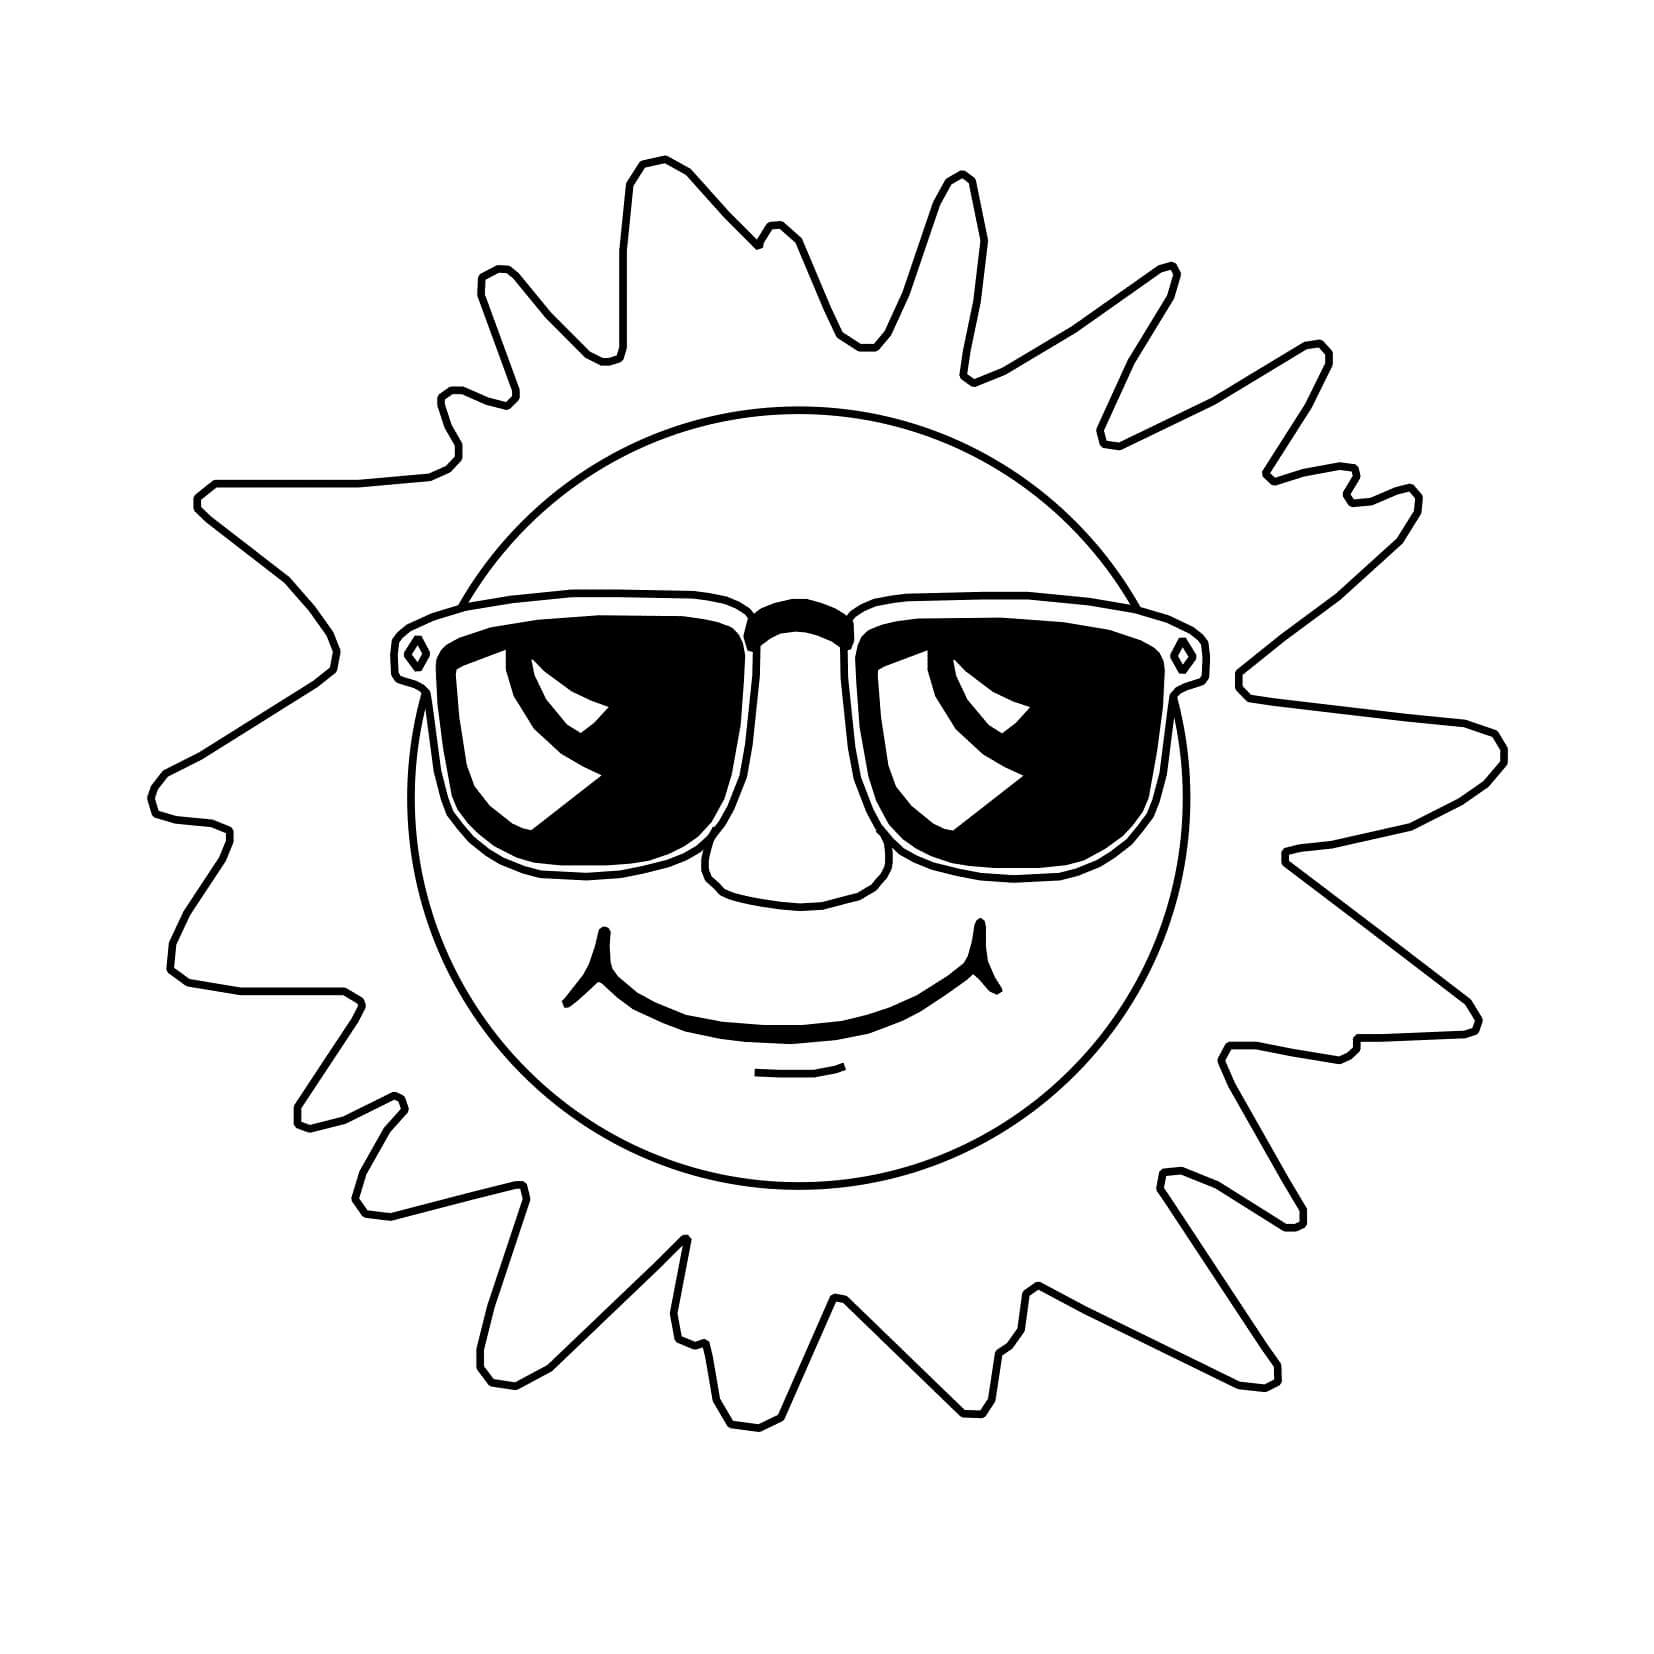 Målarbild Sun Bär Solglasögon